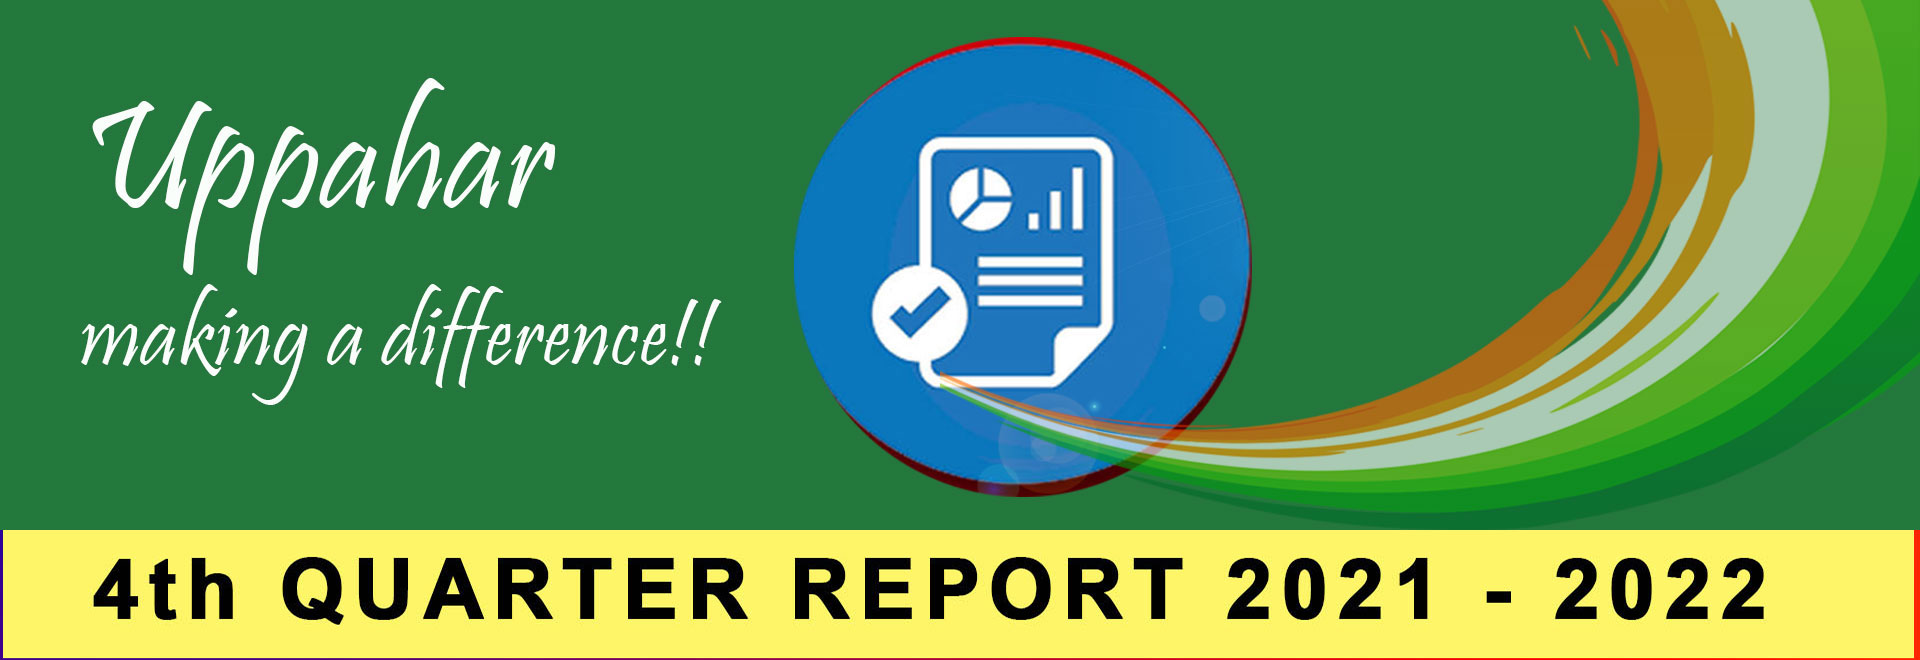 Uppahar India 2nd Quarterly Report 2021-2022